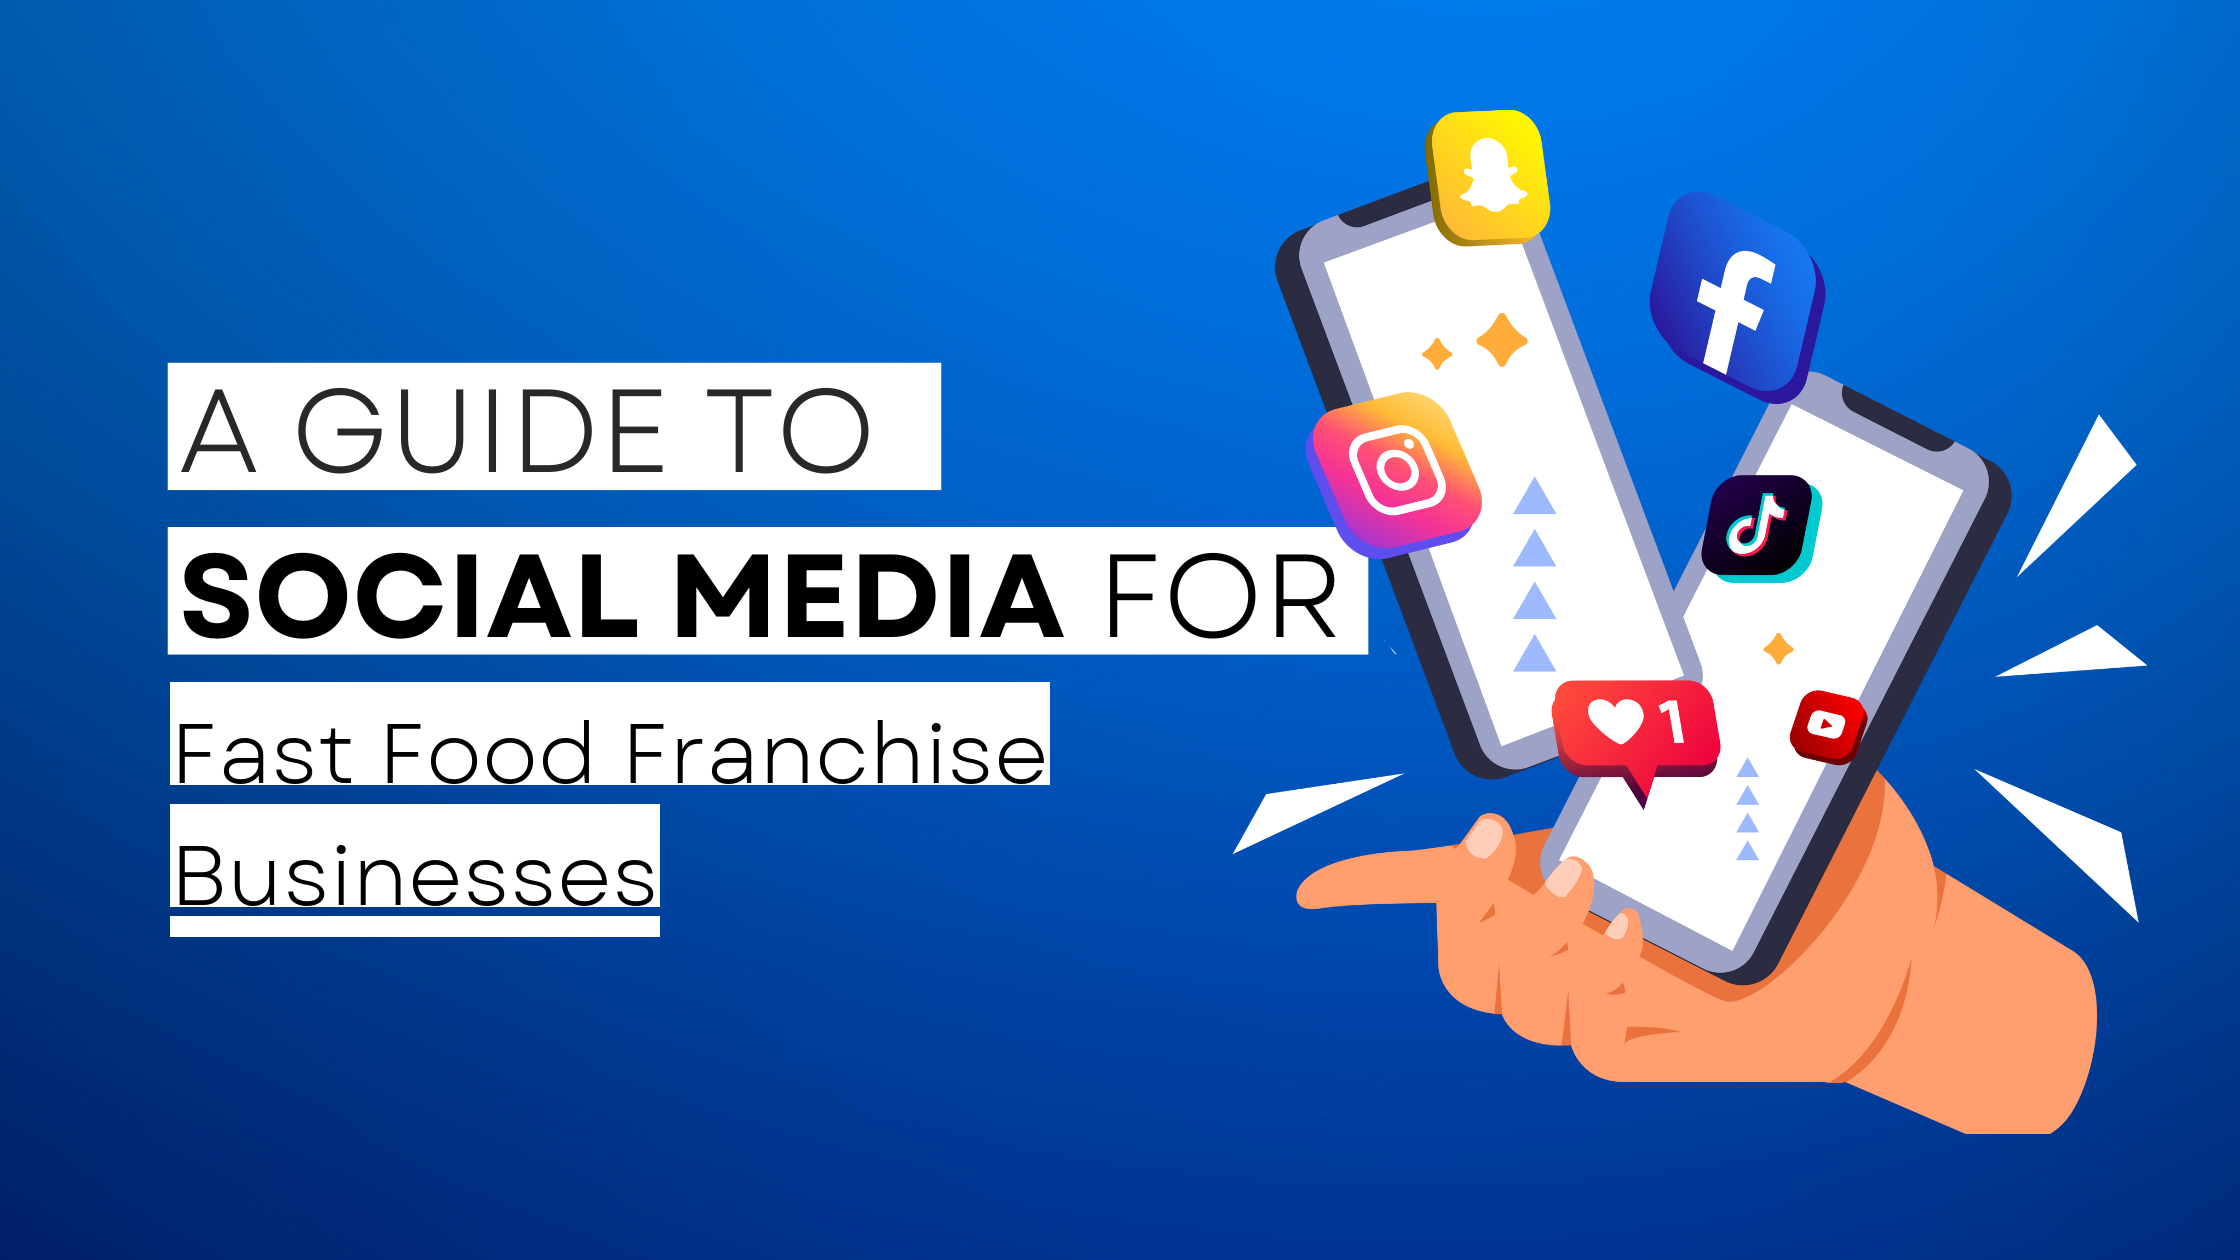 How to start Fast Food Franchise on social media